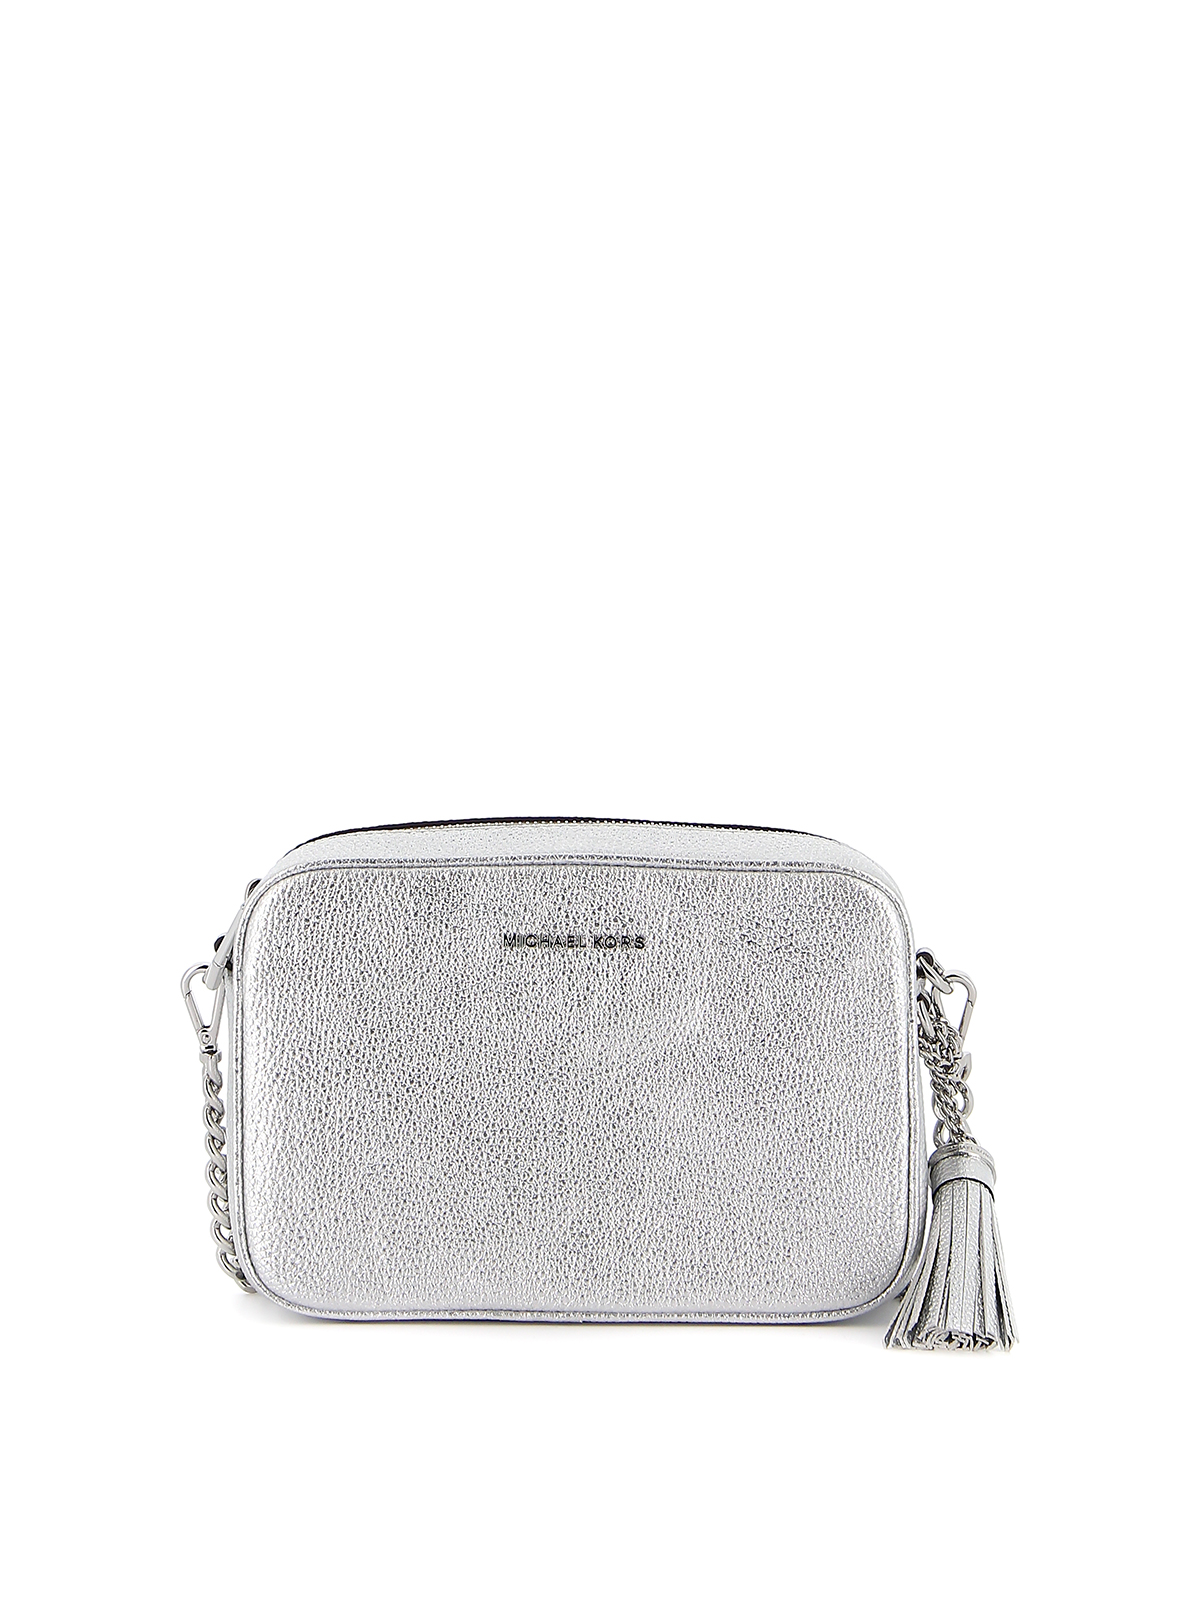 MK silver handbag